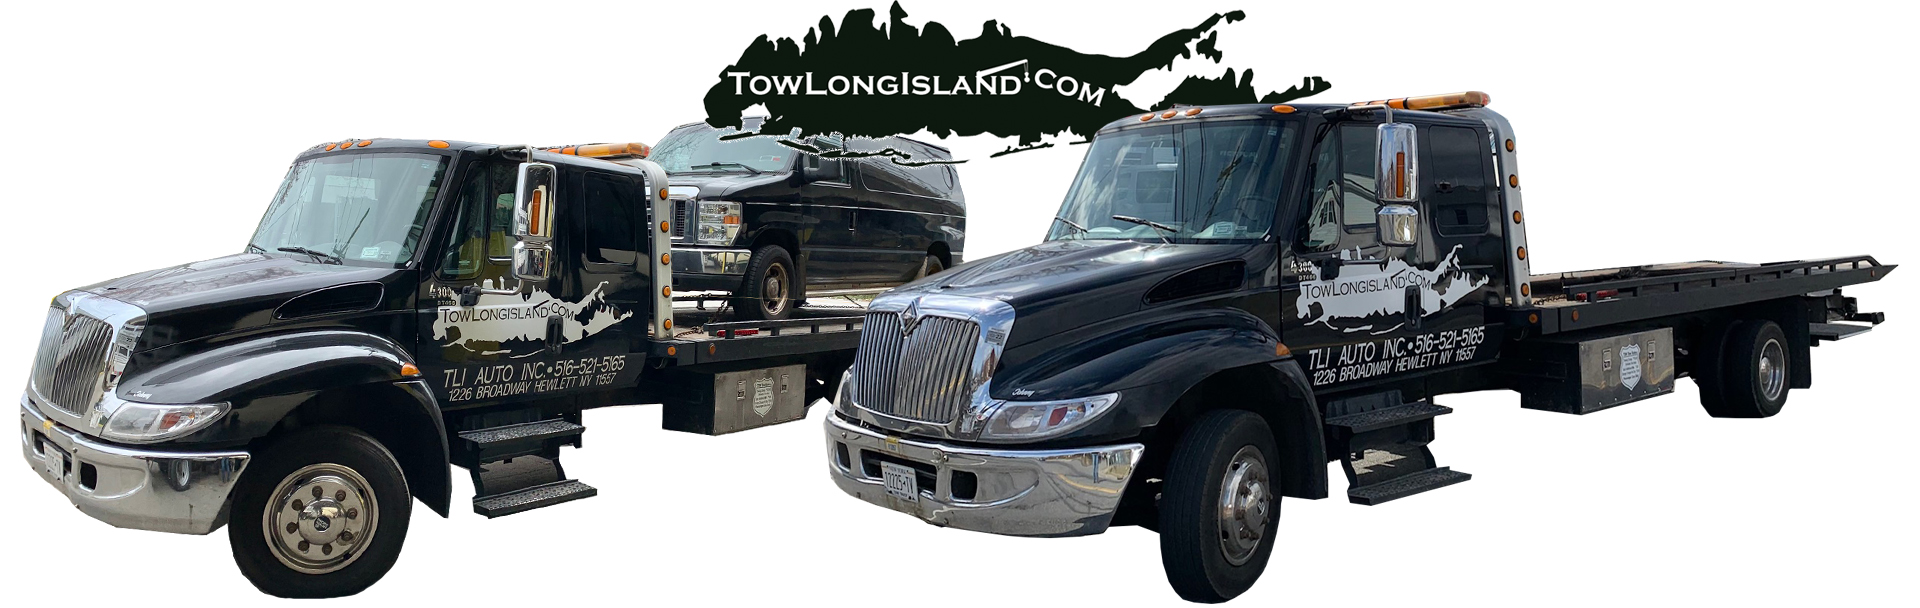 TowLongIsland.com | Tow Truck Professional Services | Queens Village, Queens, New York